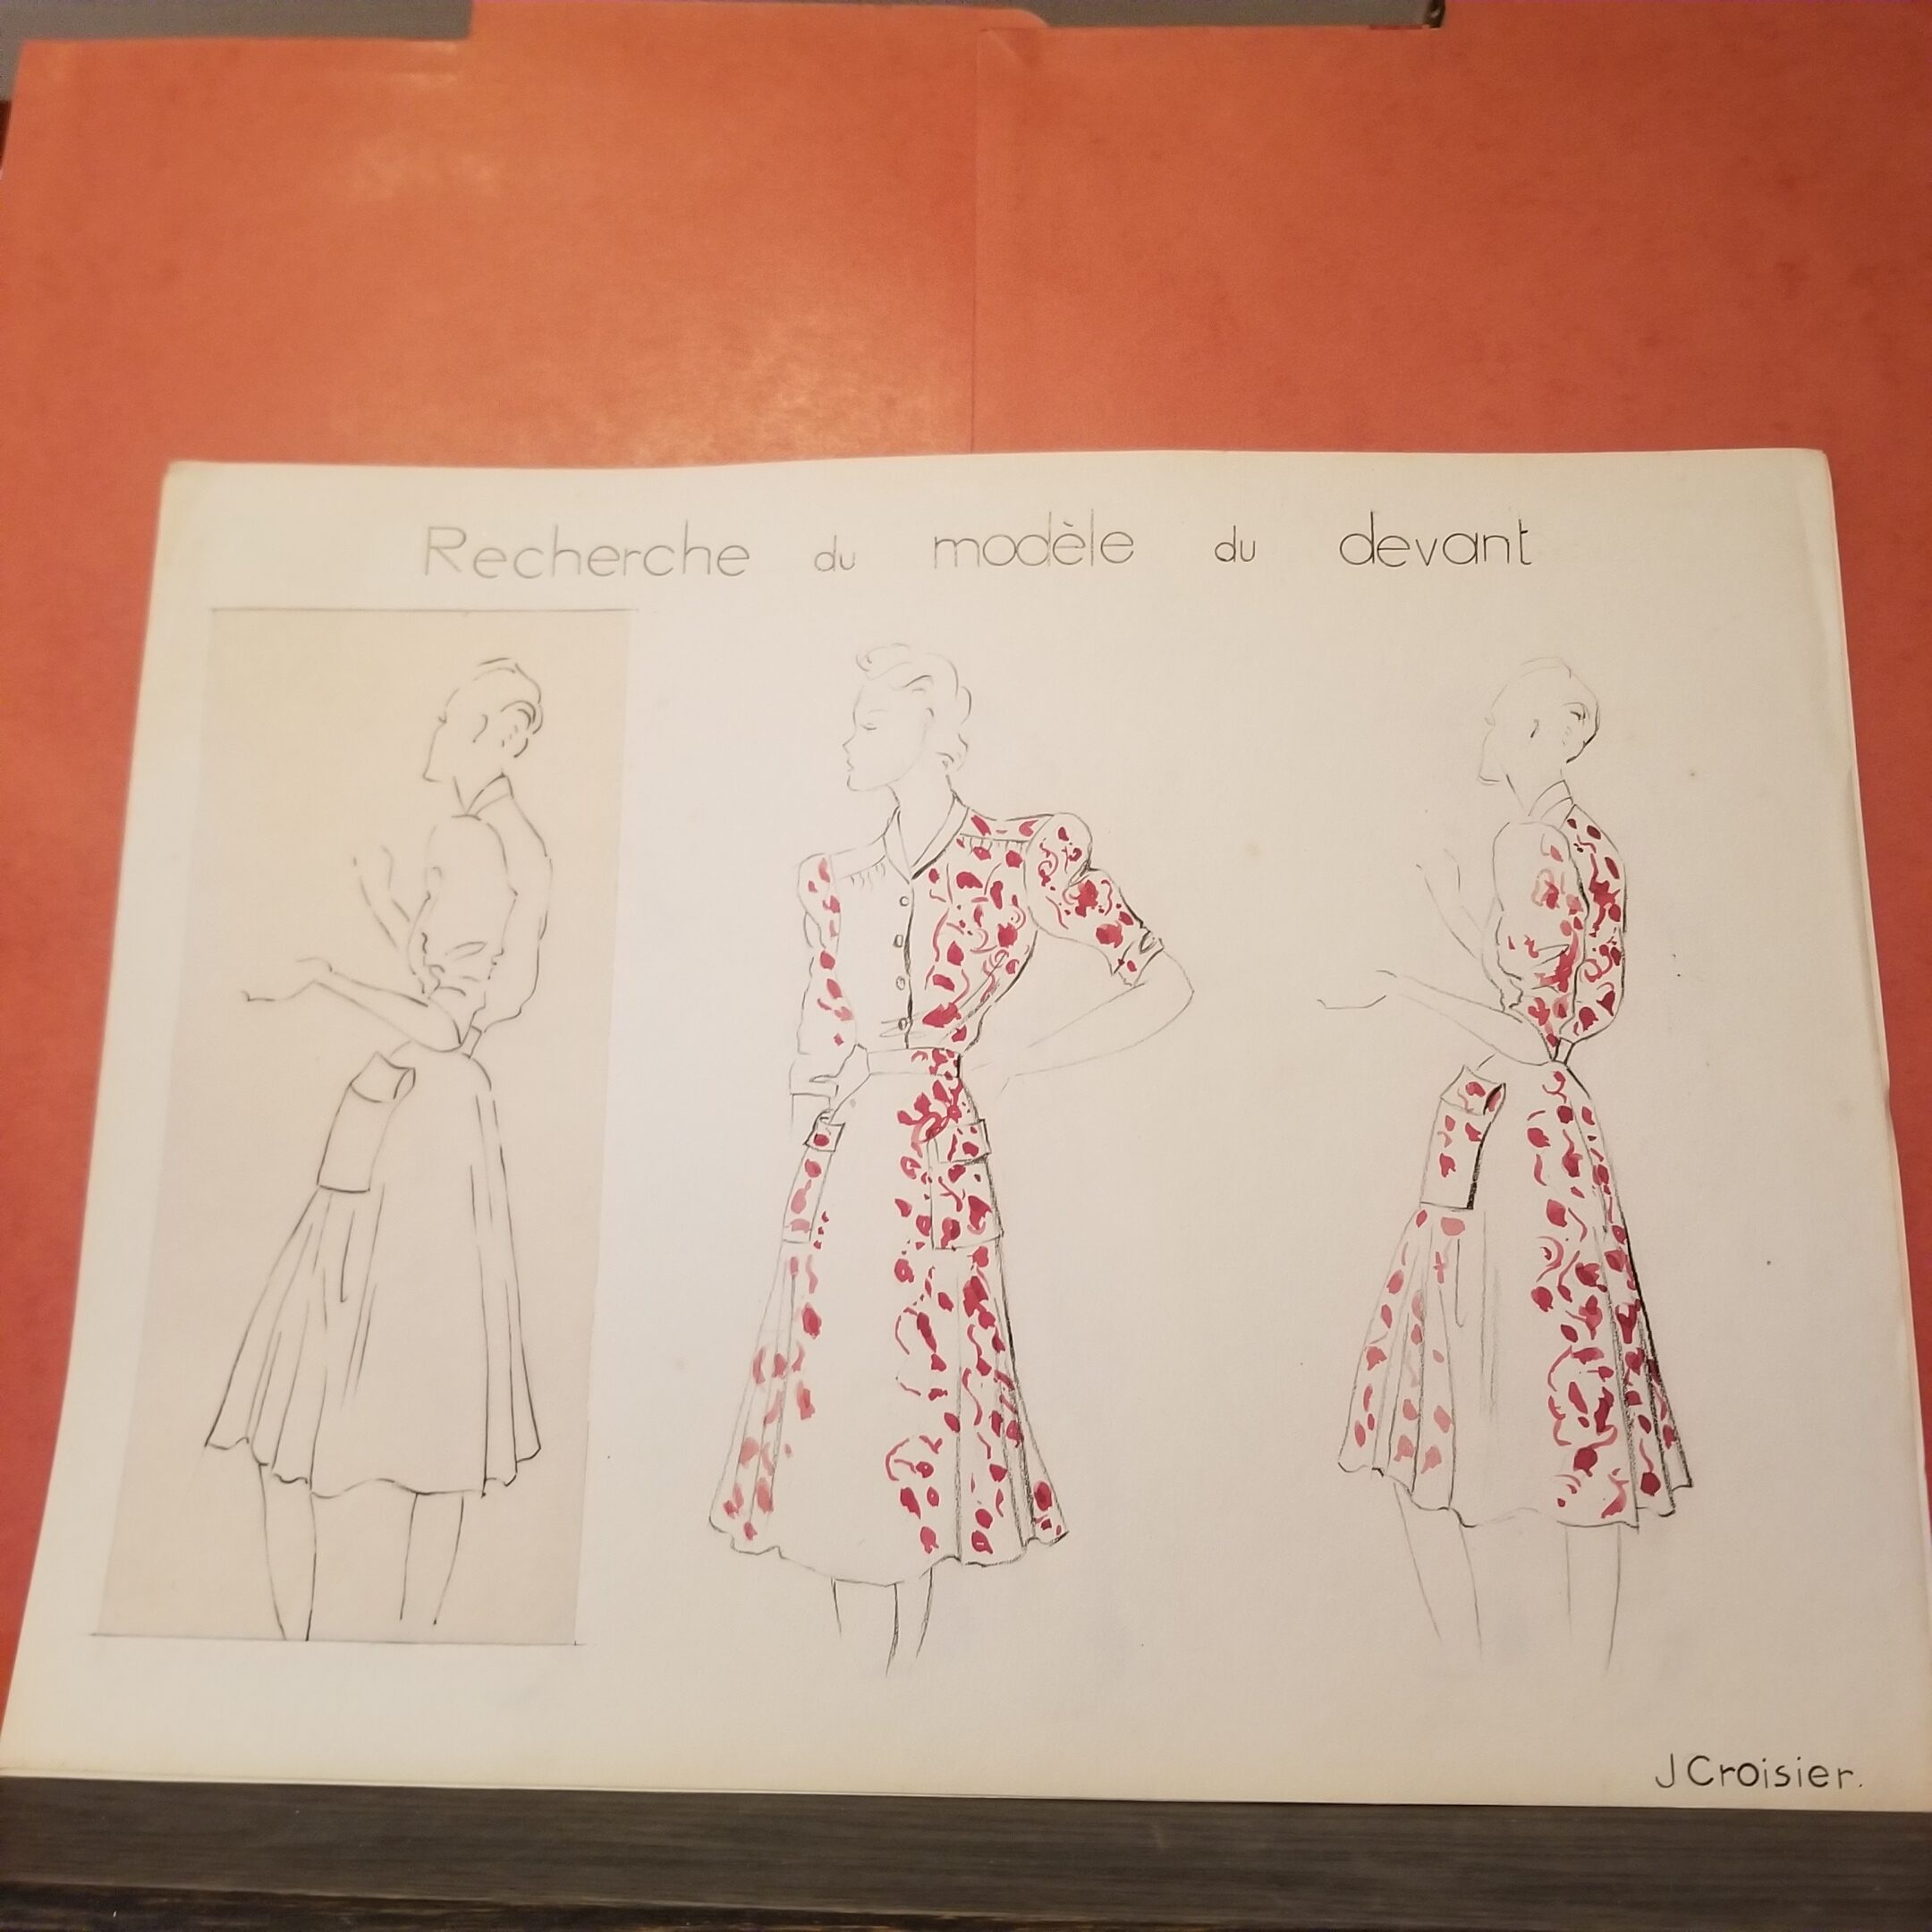 1940s fashion illustration patterned dress